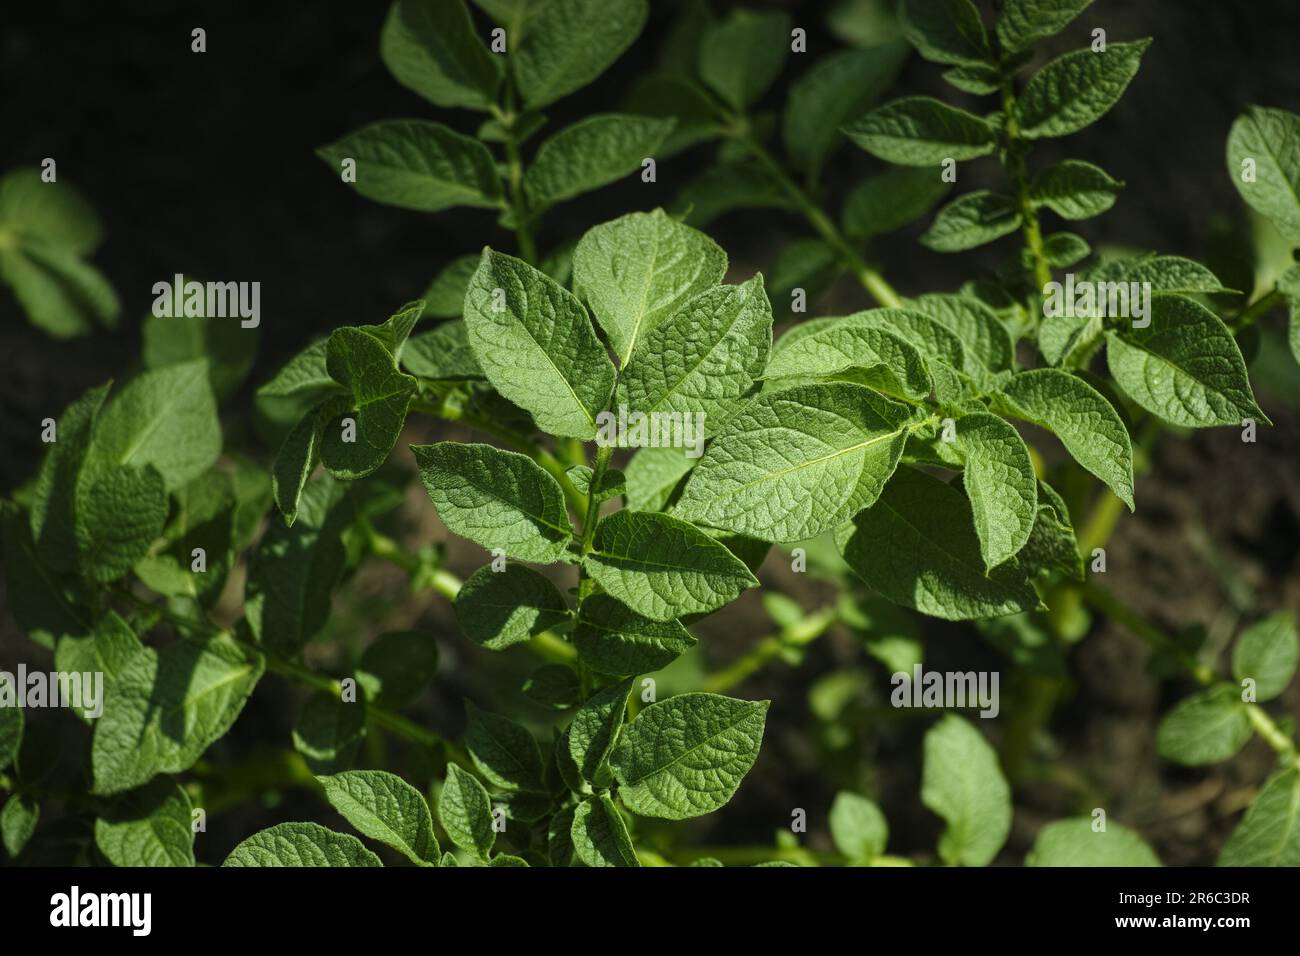 A close up shot of potato plant leaves. Stock Photo